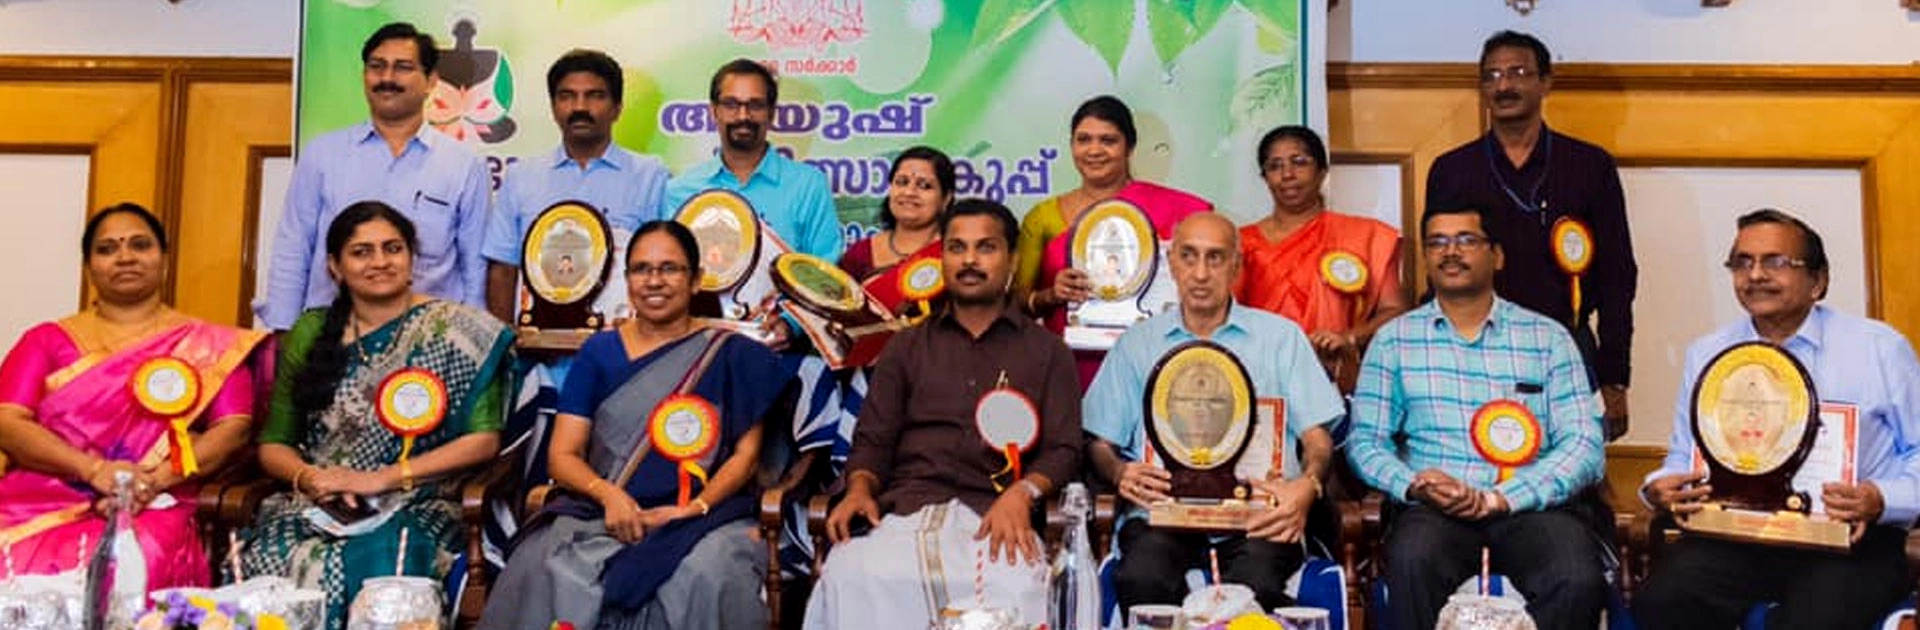 Best Ayurveda Doctors Award 2019 Presented